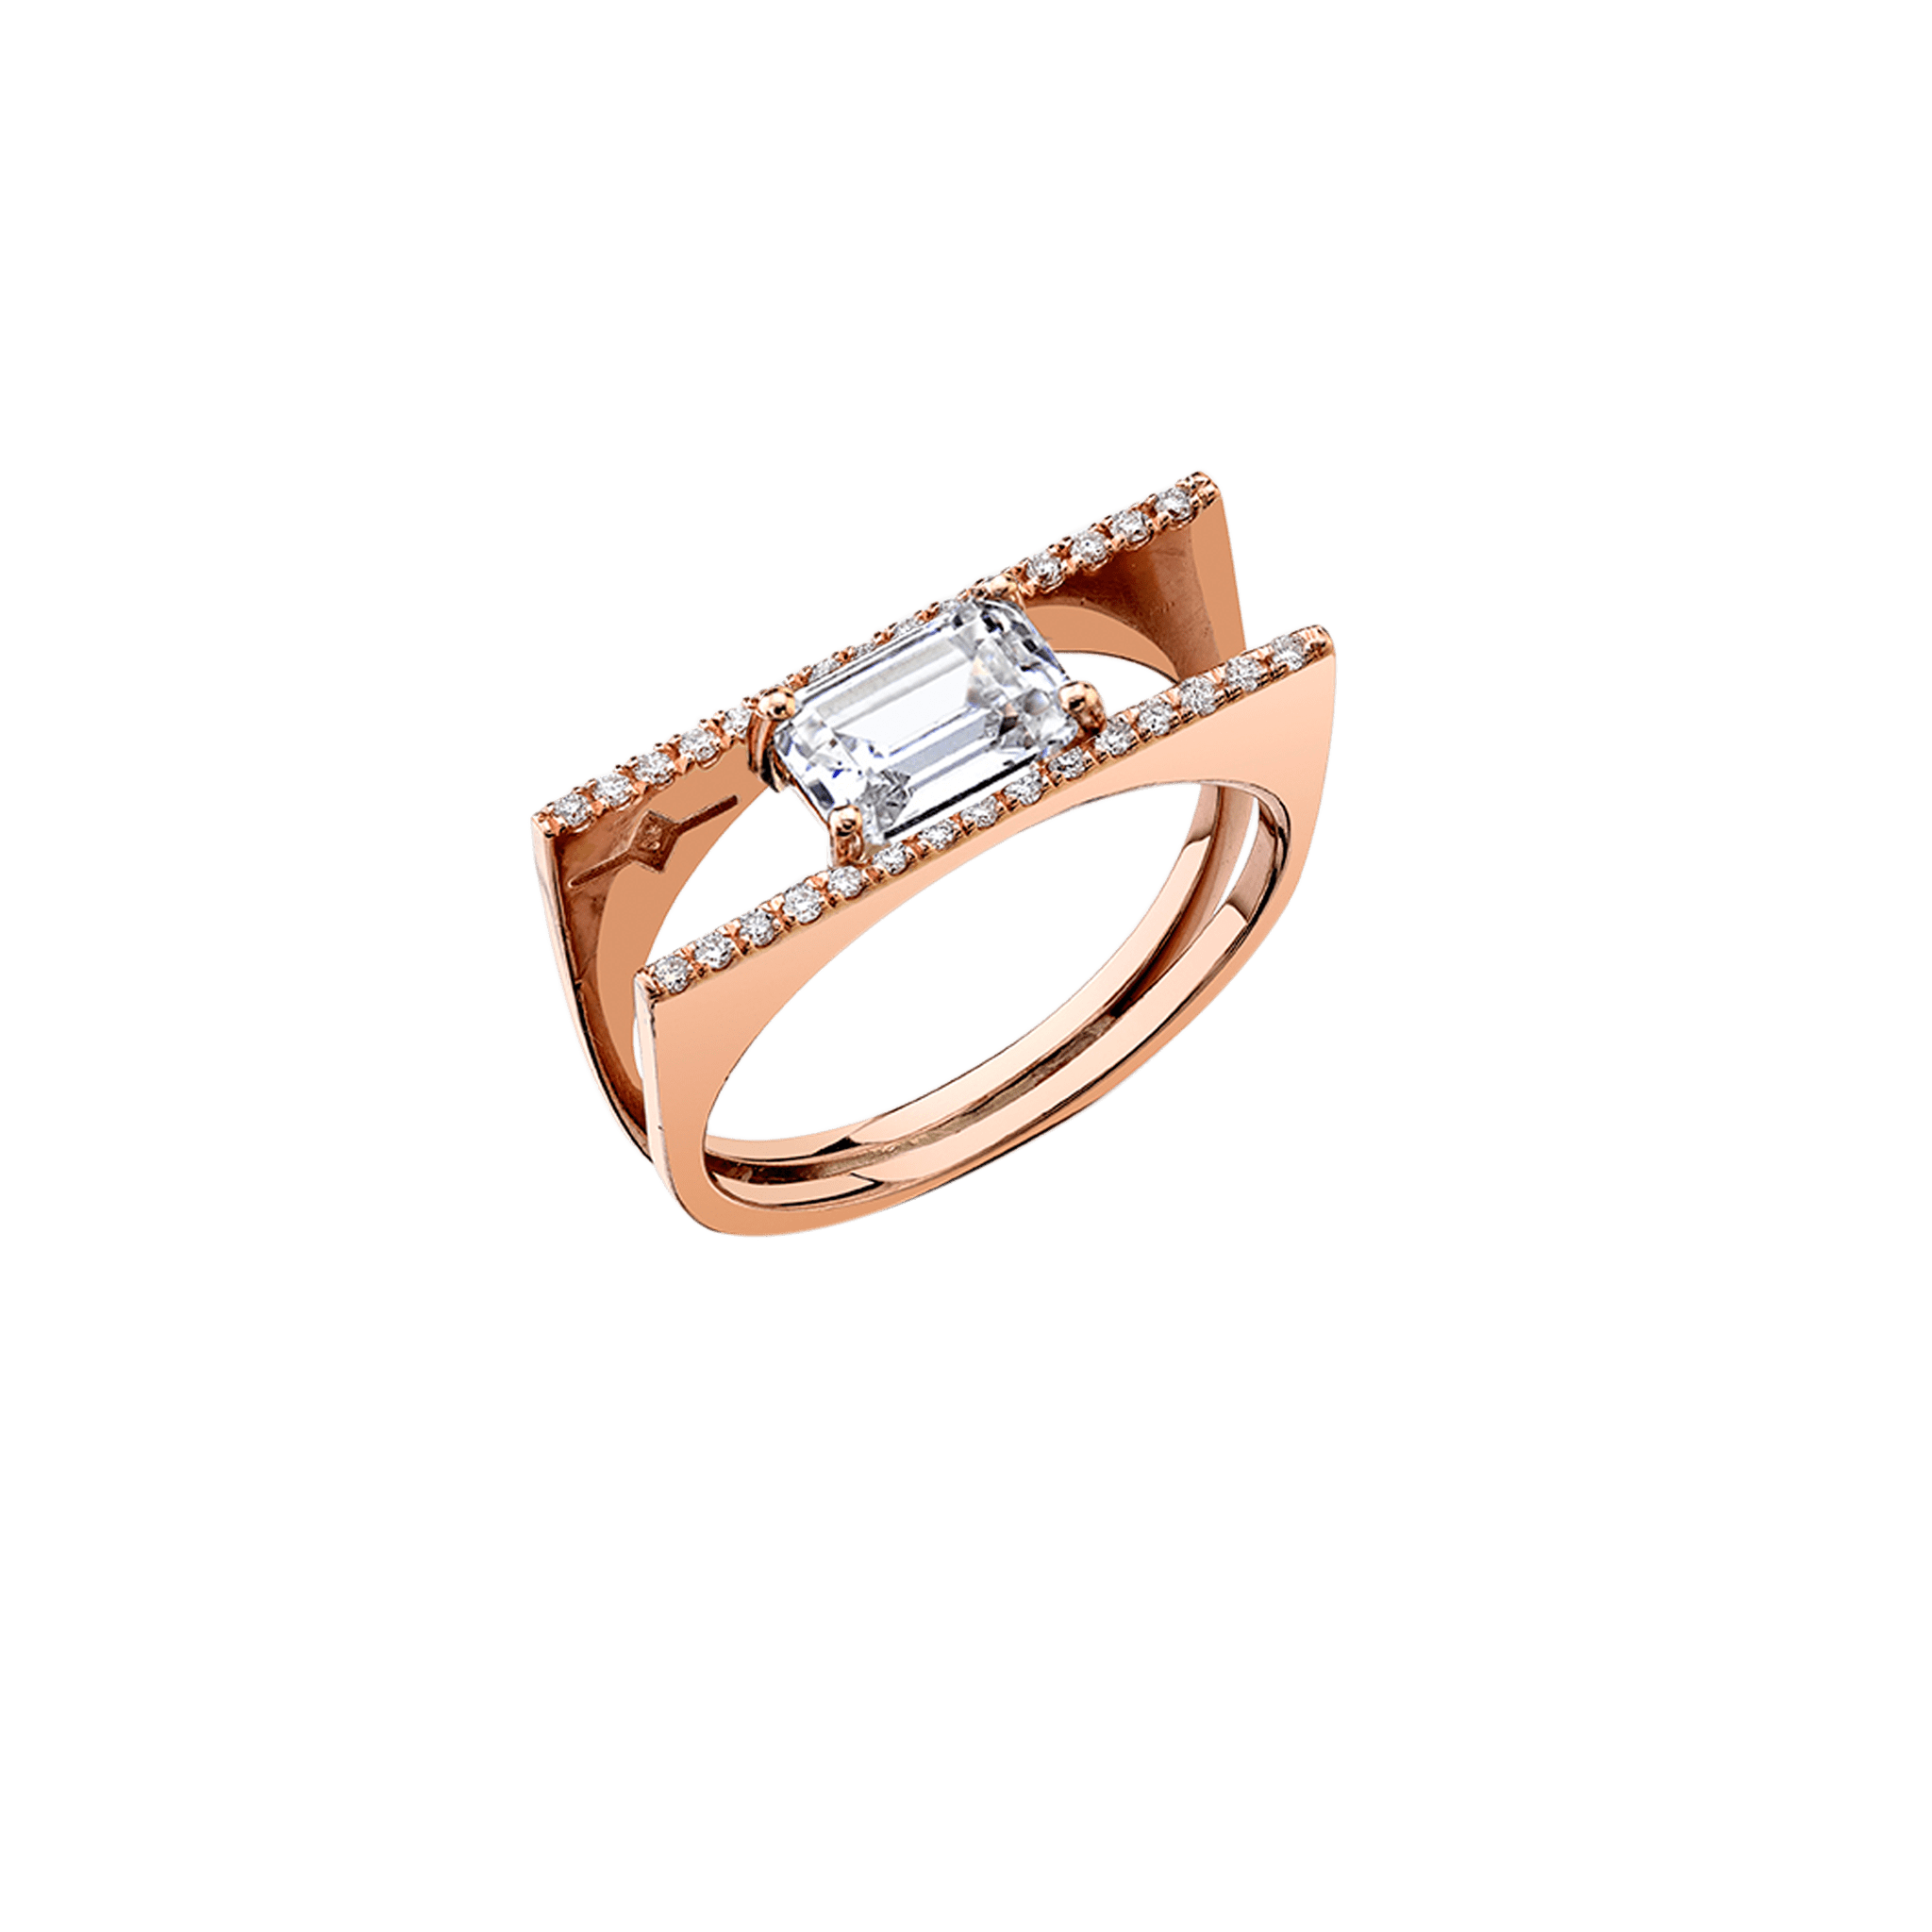 Dual Axis Ring with Emerald Cut Diamond - Gabriela Artigas